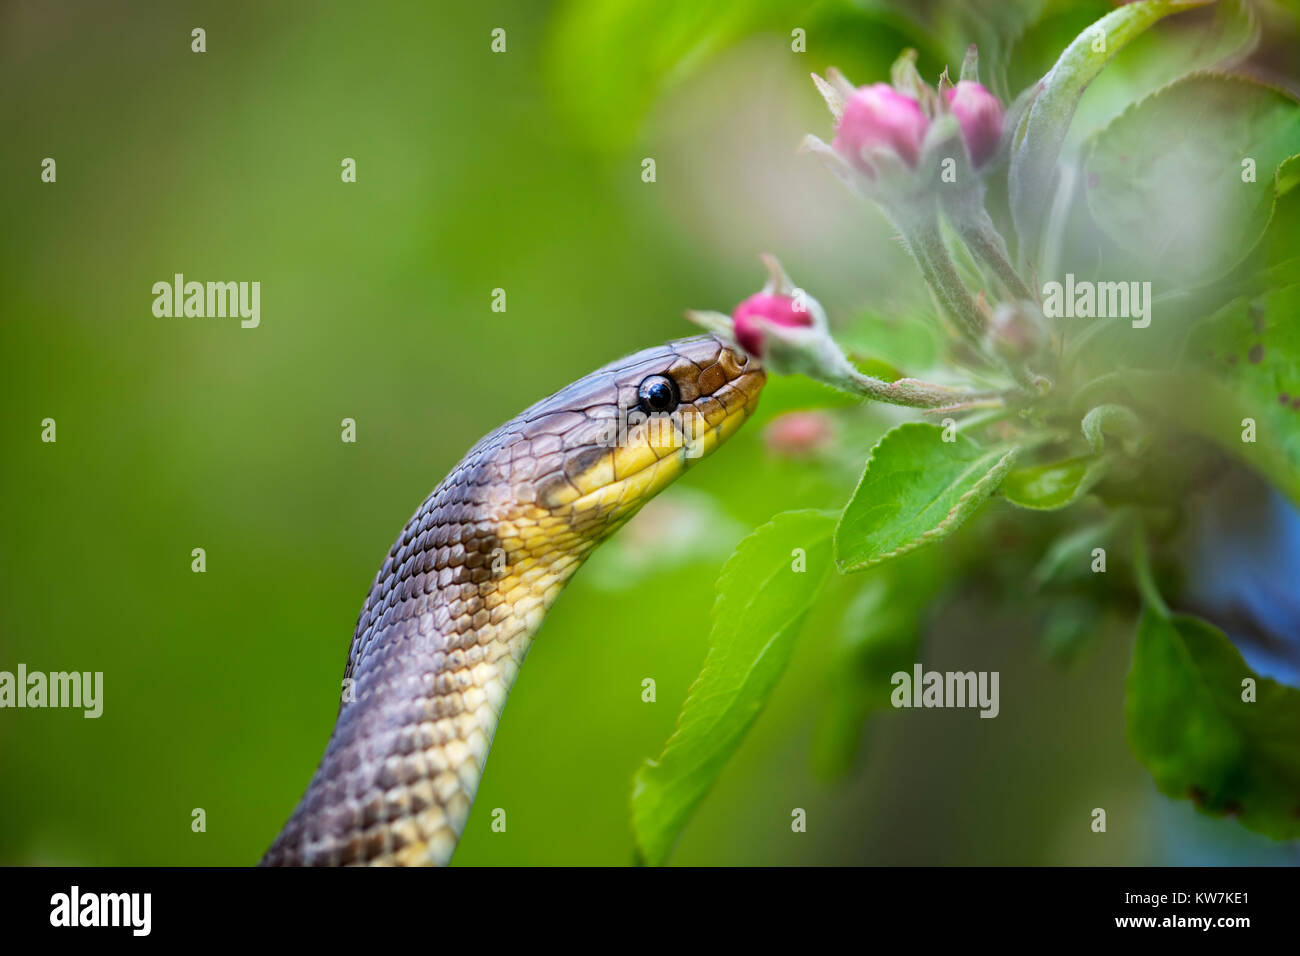 Aesculapian Snake (Elaphe longissima or Zamenis longissimus) is a large slender non-venomous snake. Stock Photo